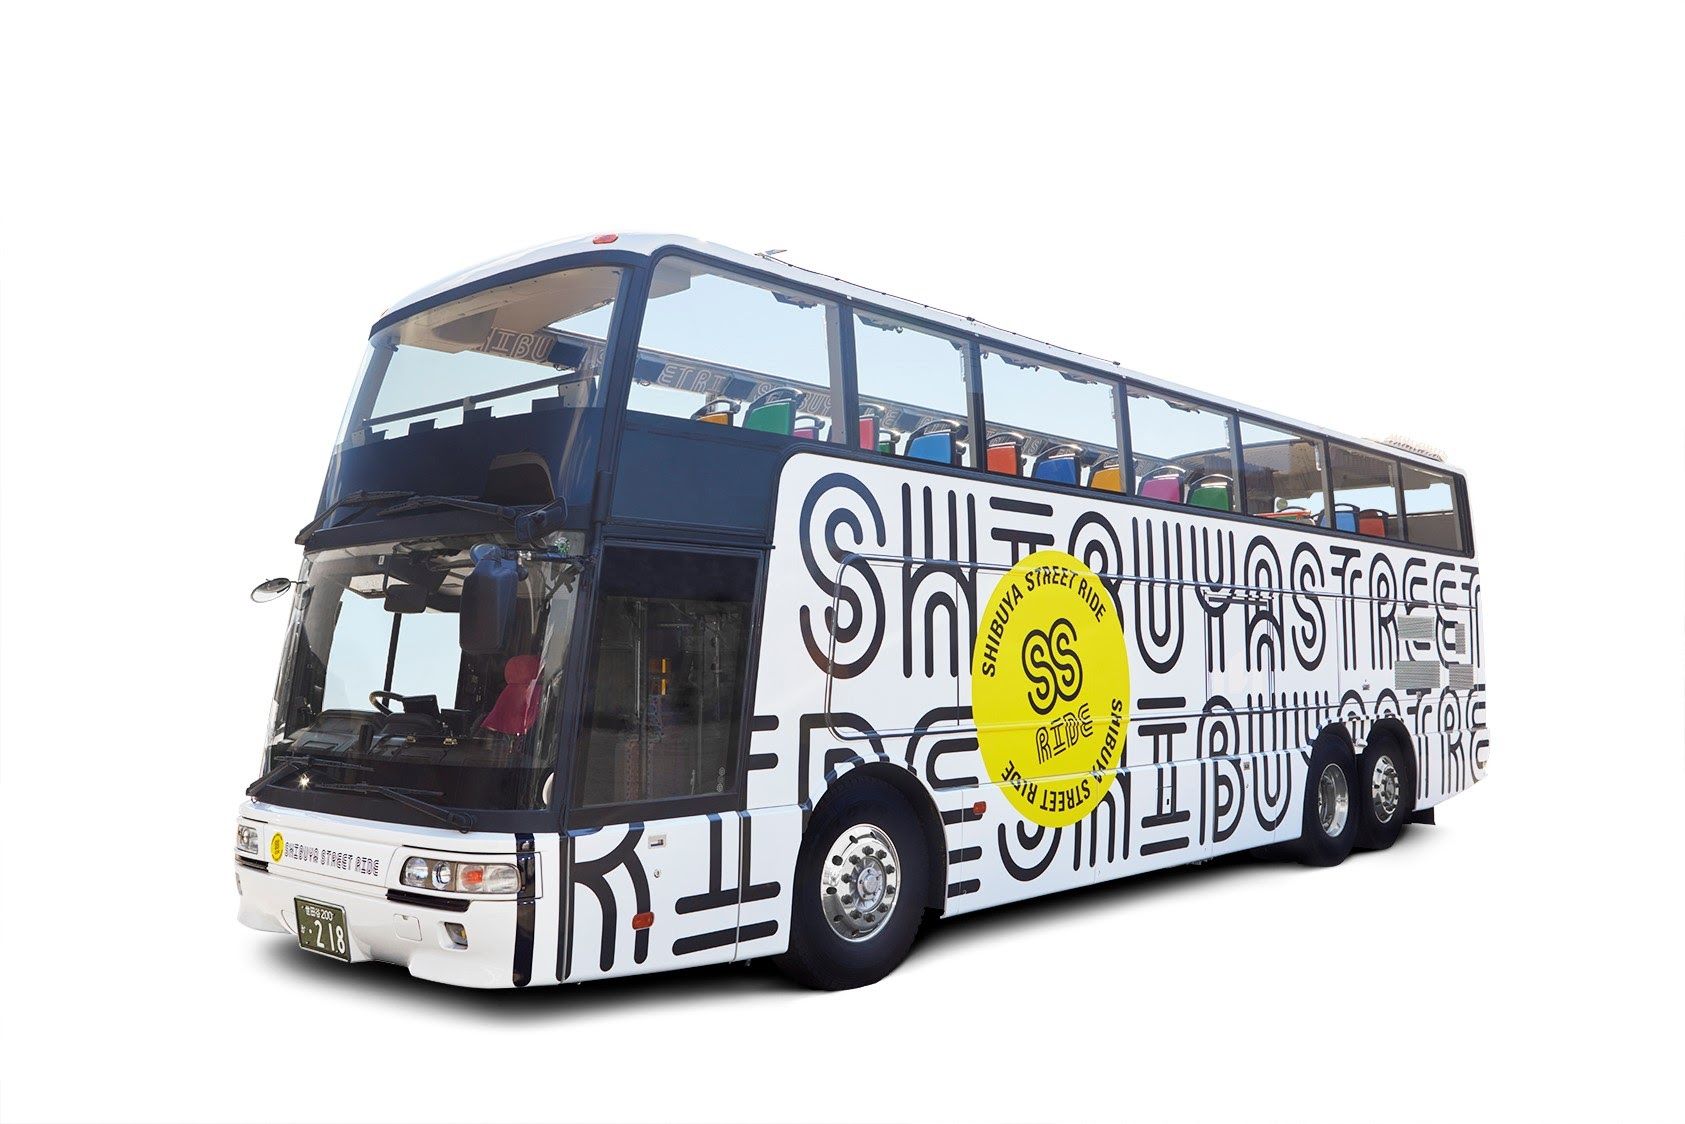 涩谷露天观光巴士 SHIBUYA STREET RIDE